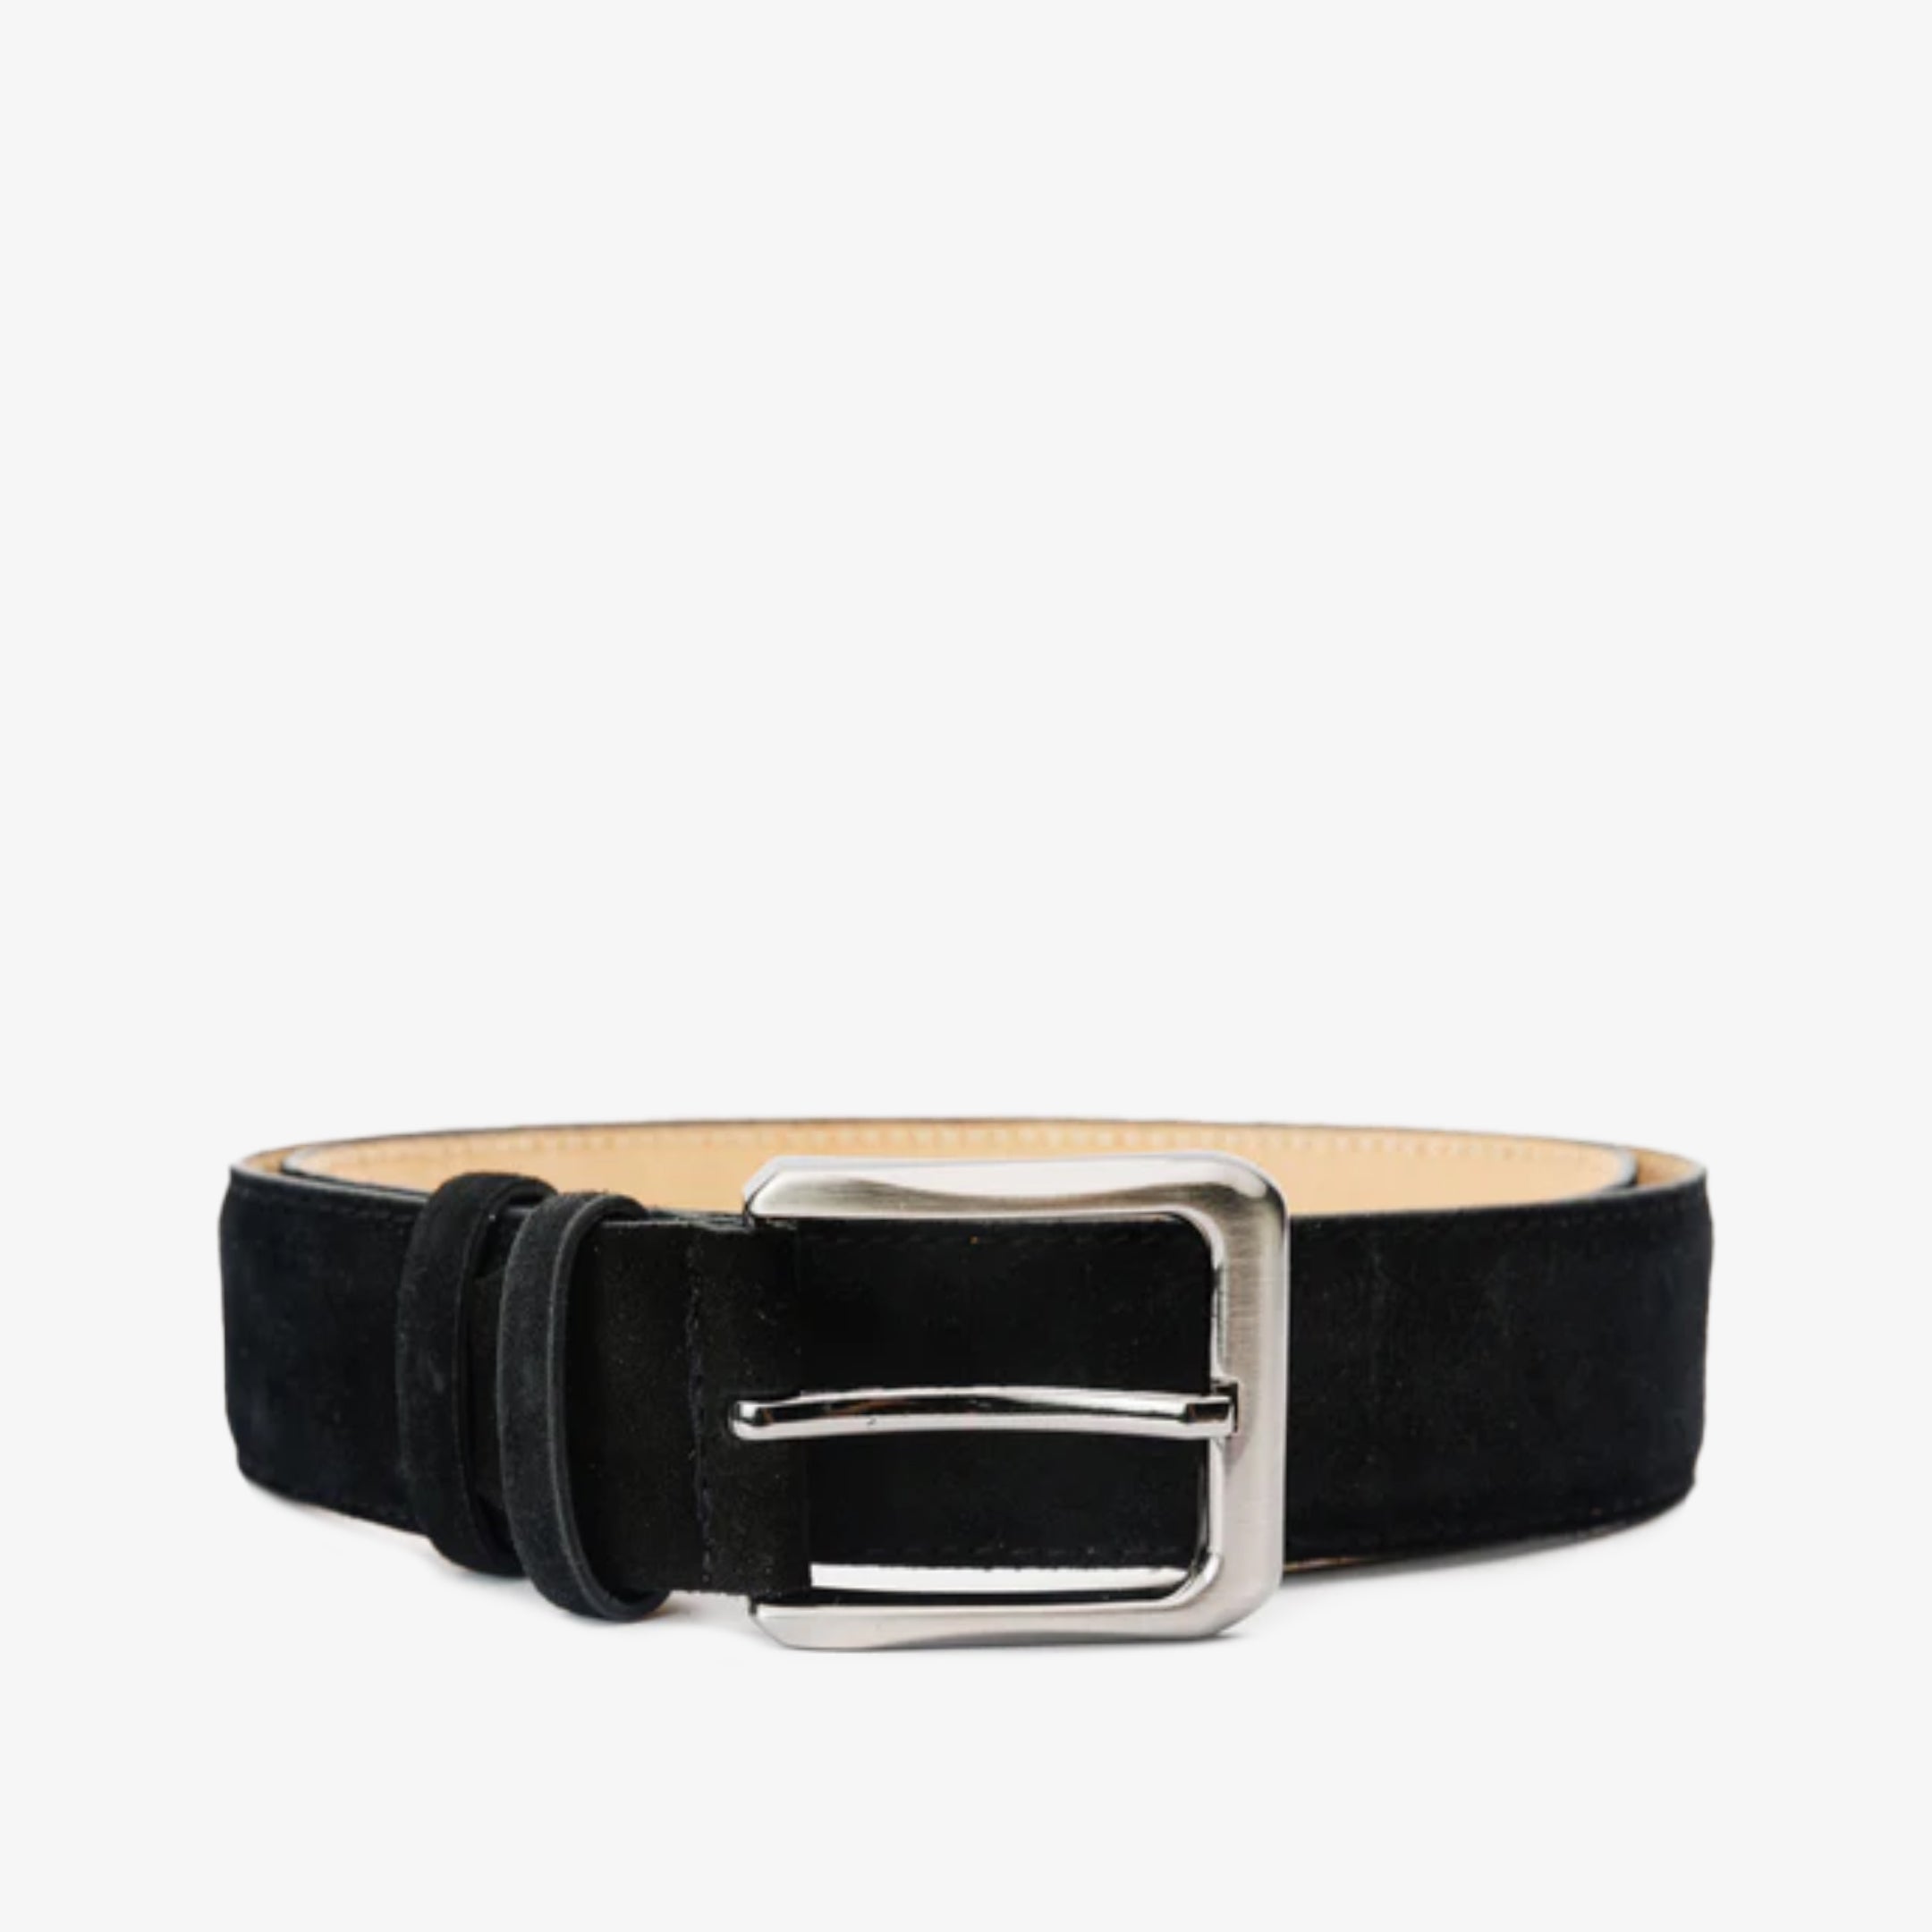 The Bari Black Suede Leather Belt